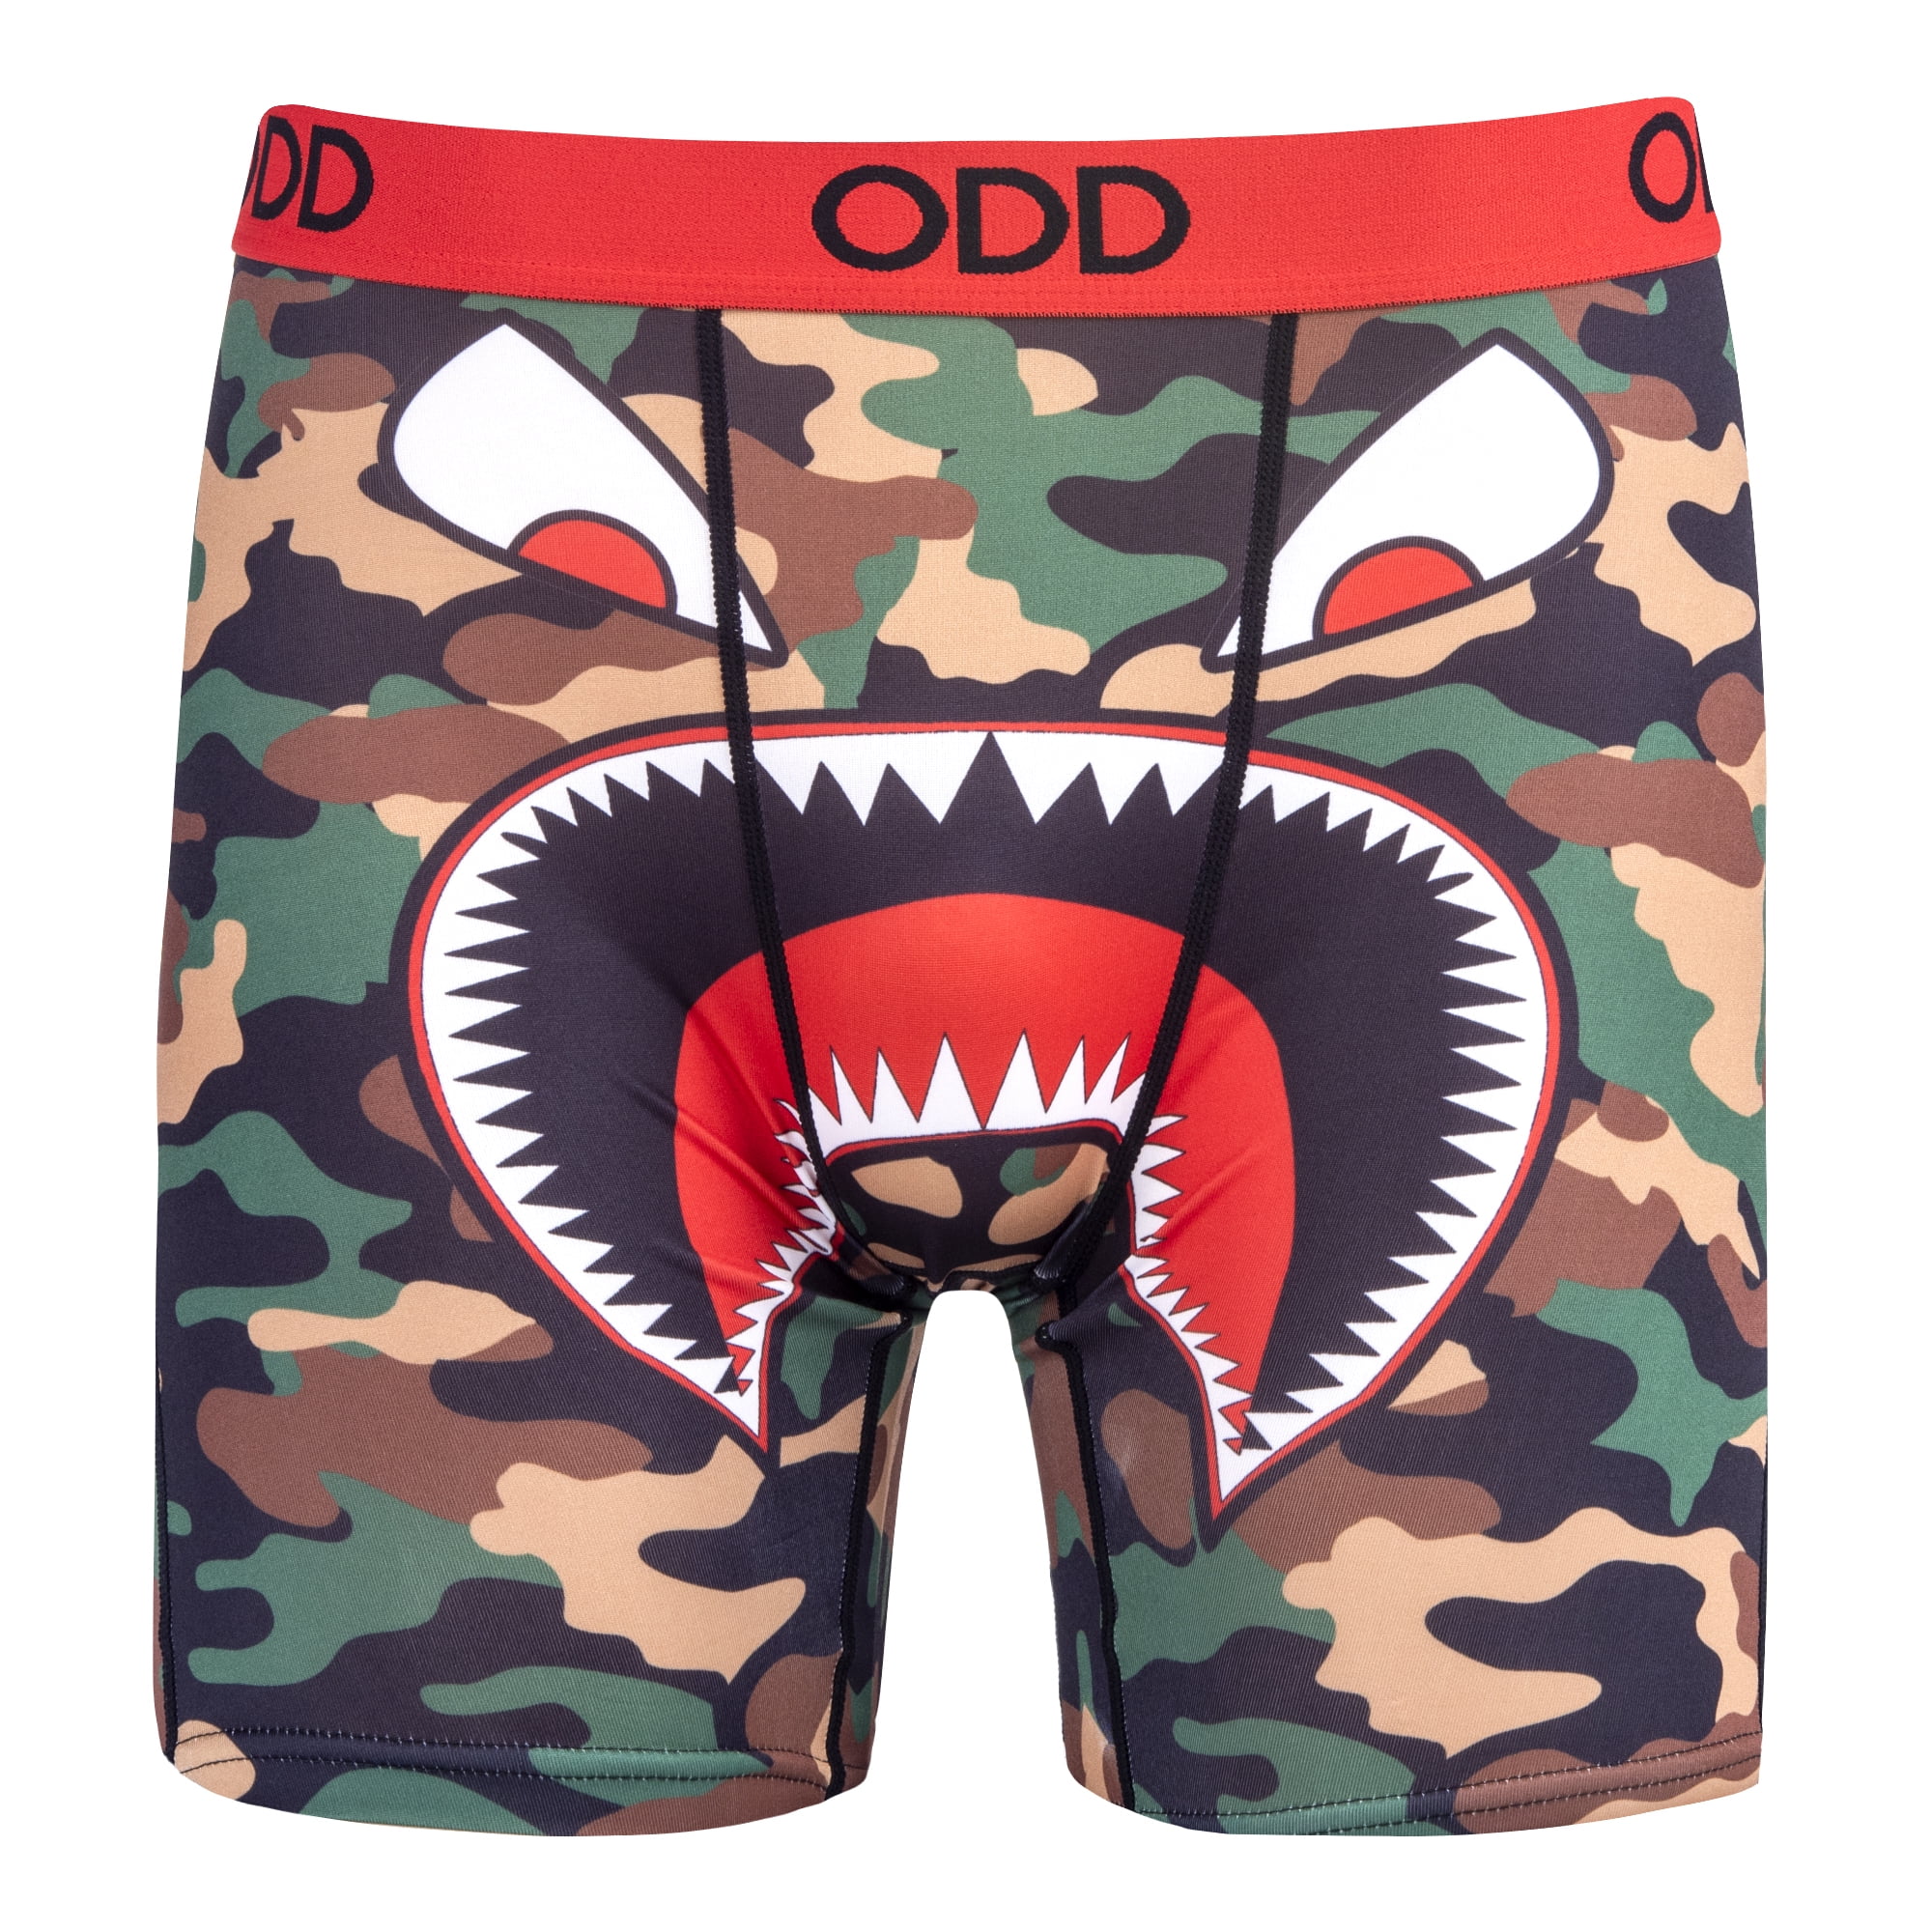 Odd Sox, Thank You, Enjoy!, Men's Boxer Briefs, Funny Novelty Underwear,  Large